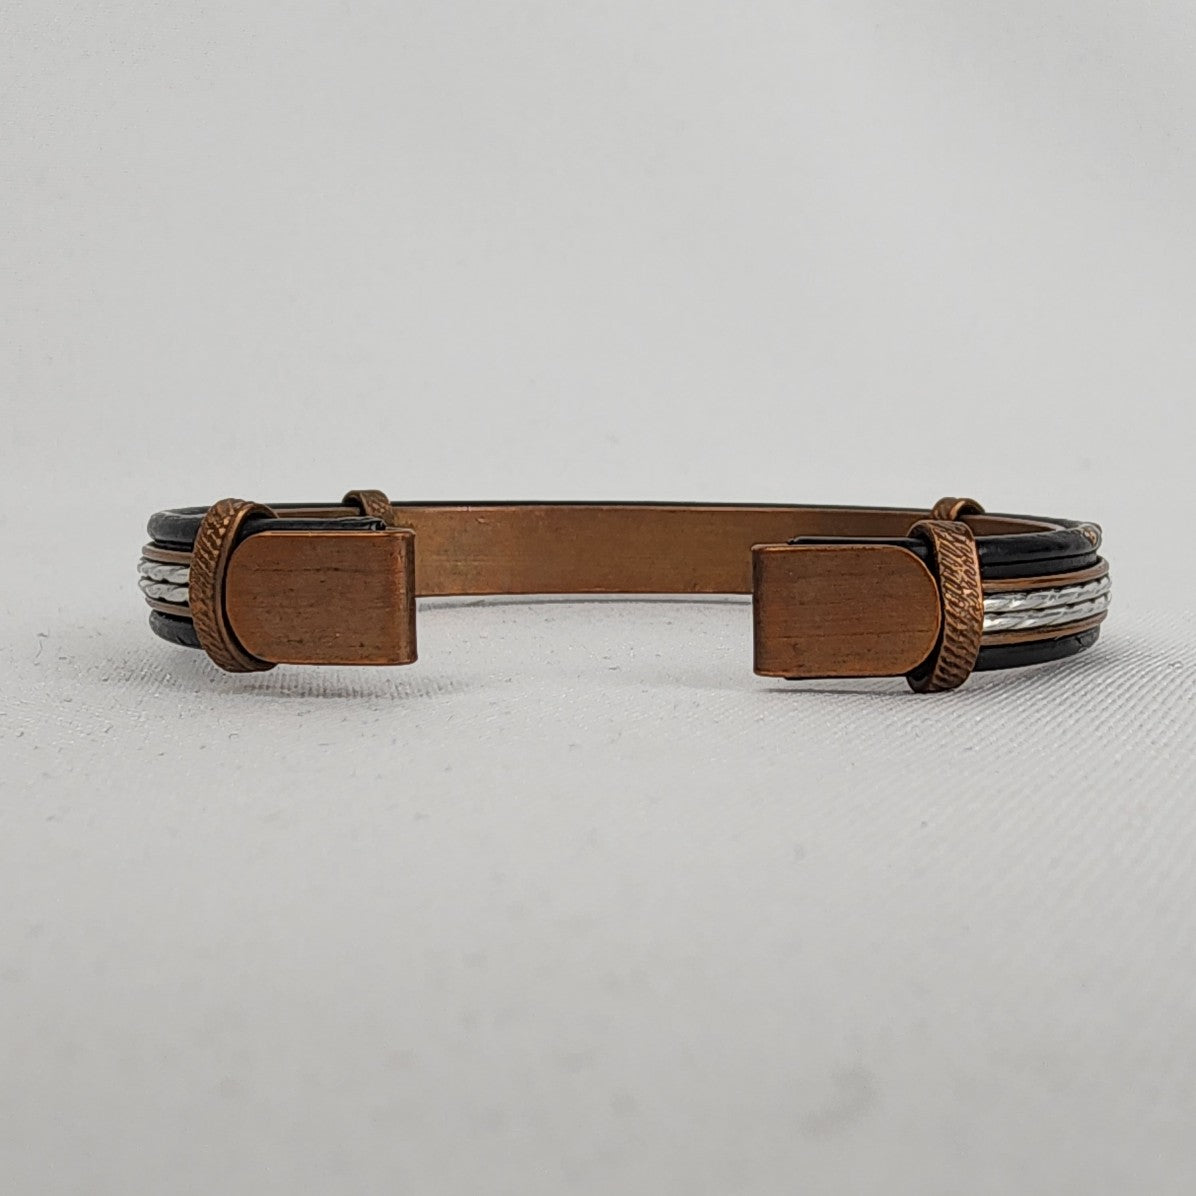 Vintage Copper & Silver Cuff Bracelet